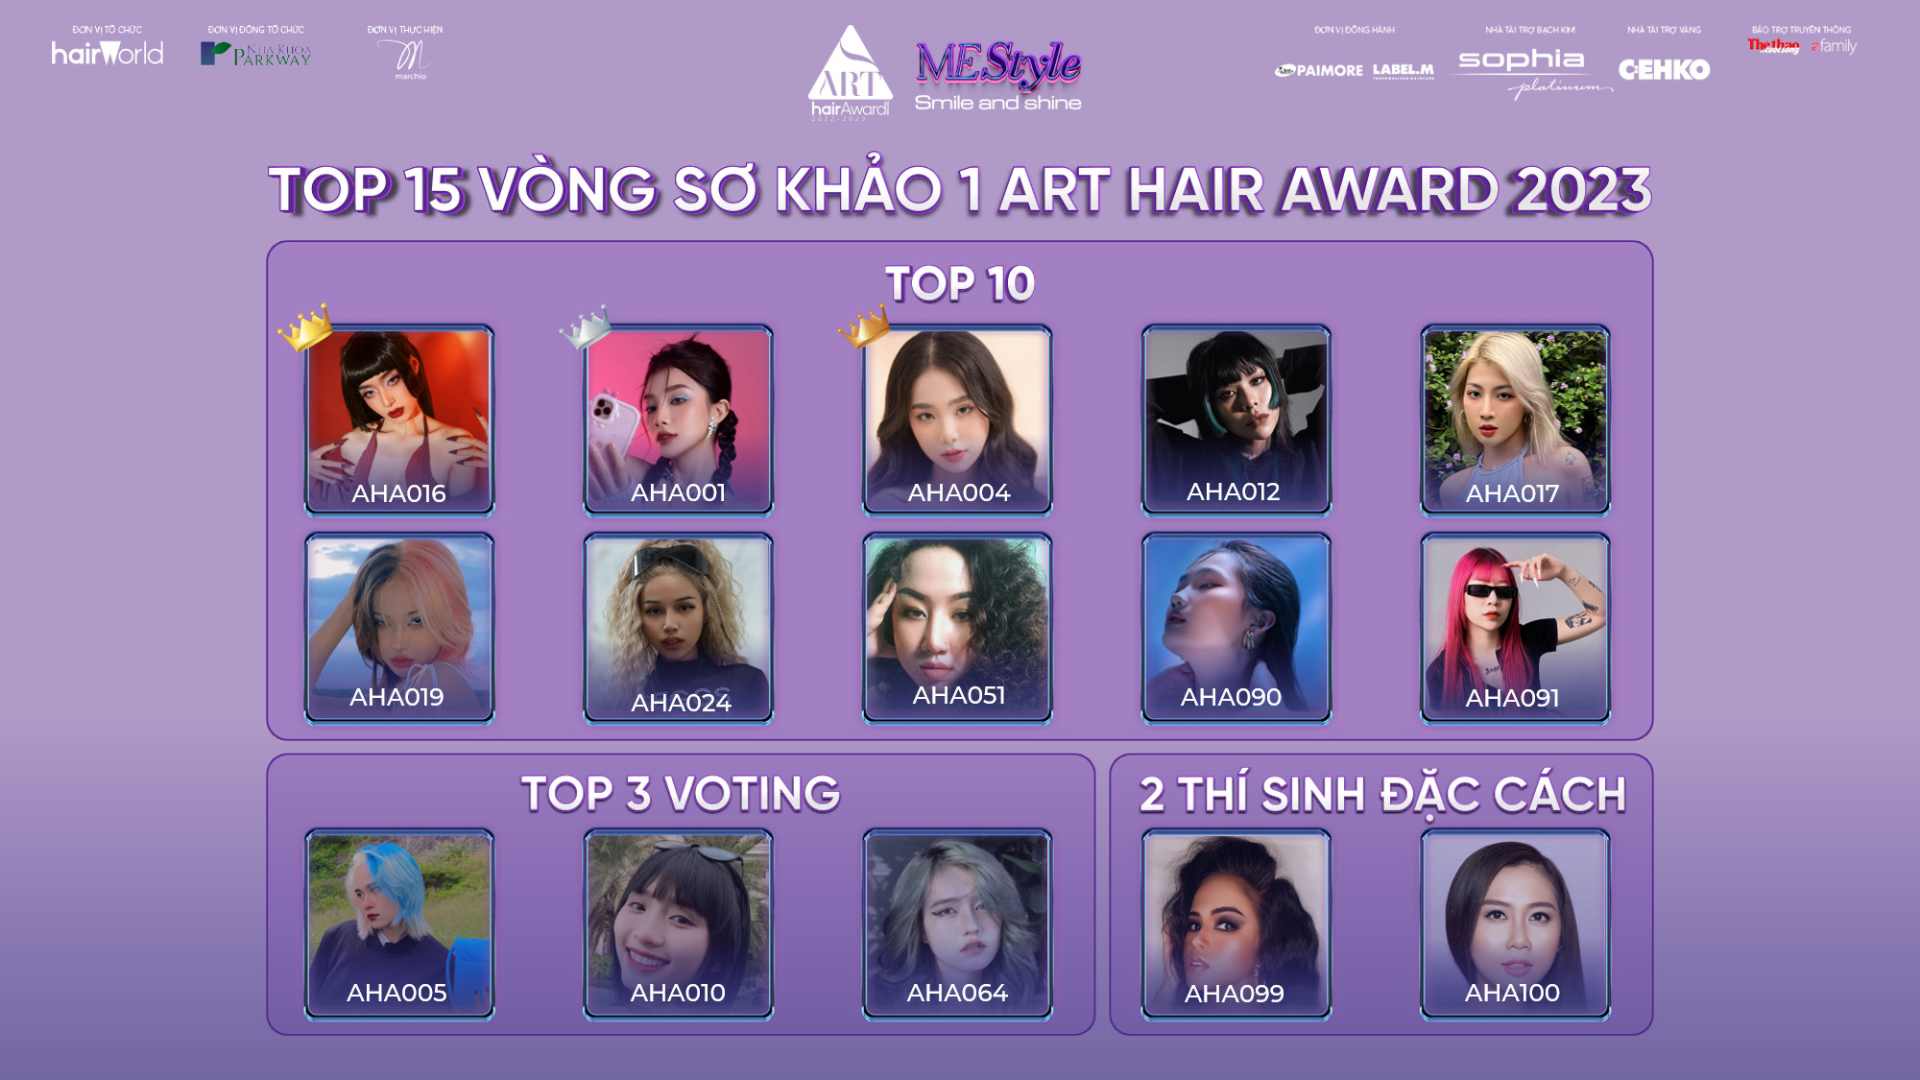 Art Hair Award Vietnam 2023 